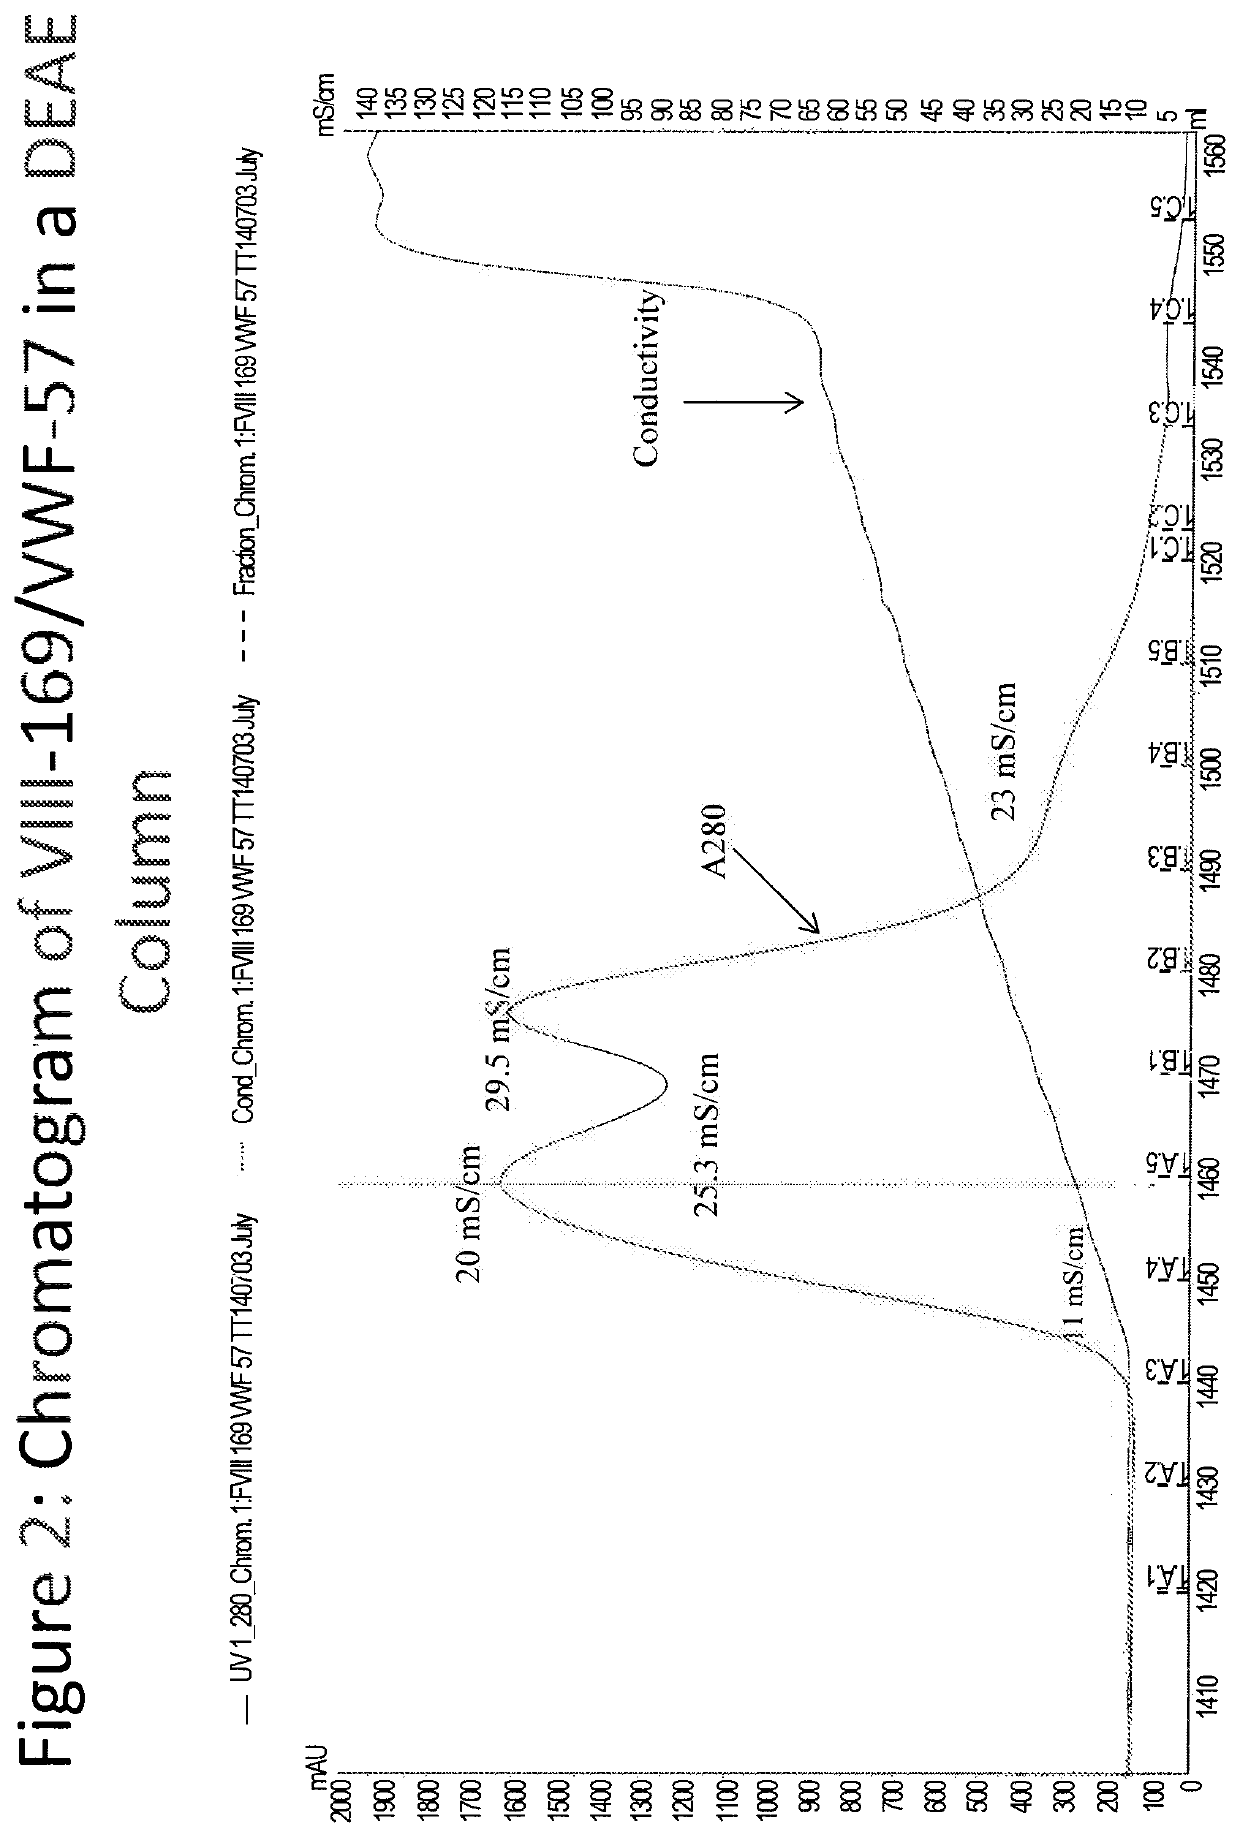 Purification of chimeric FVIII molecules